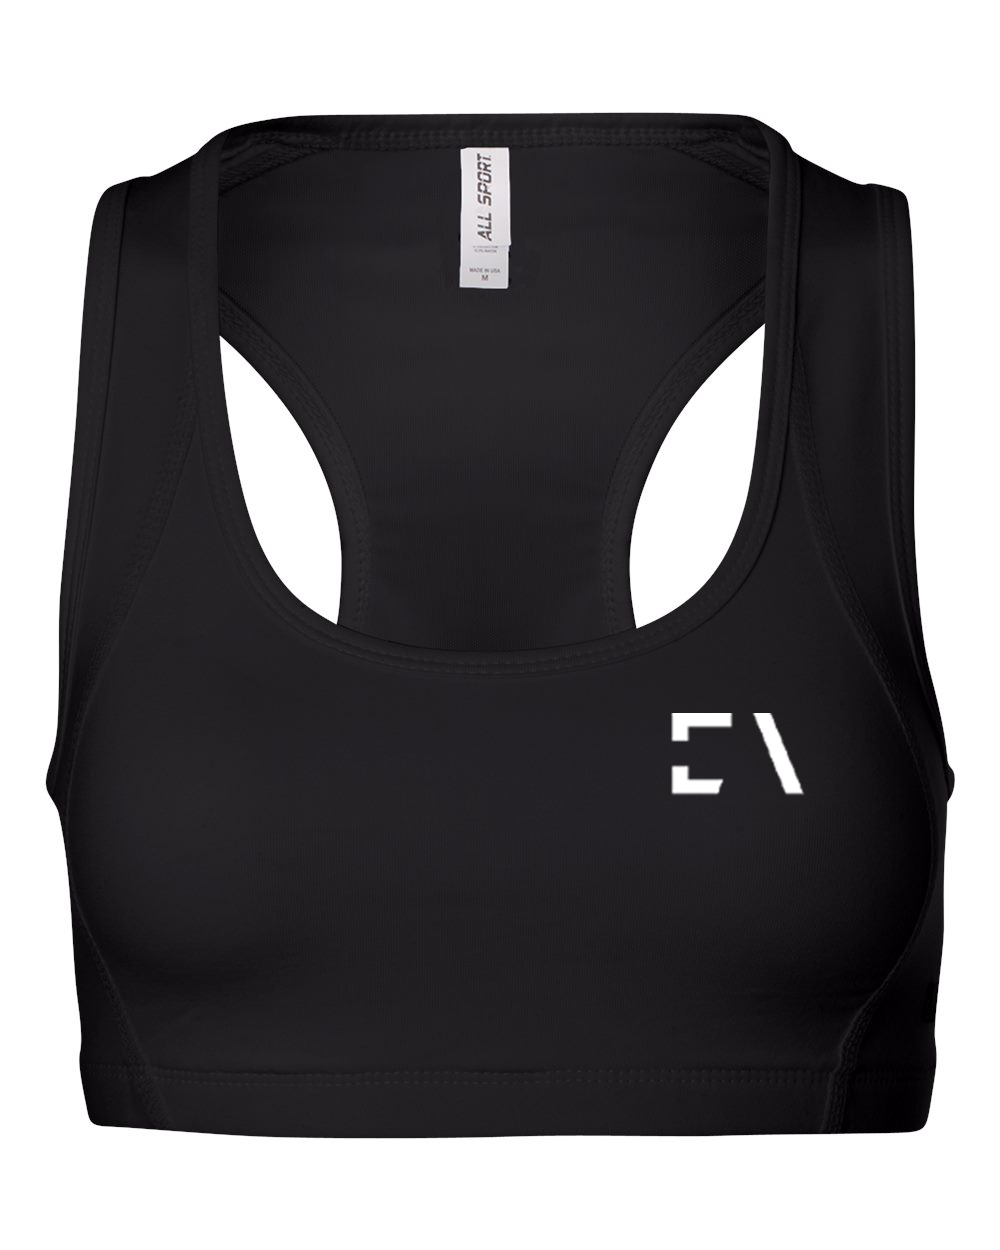 custom design of alo - Ladies' Mesh Back Sports Bra